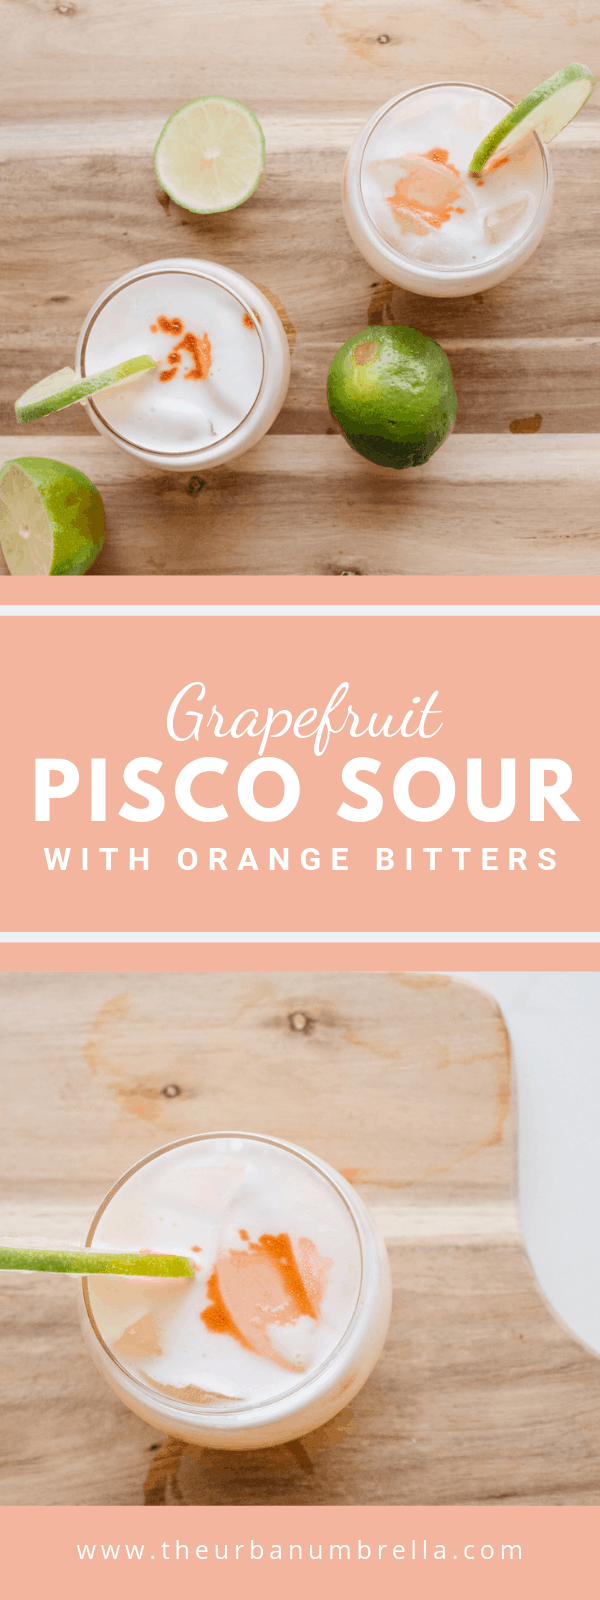 Grapefruit Pisco Sour with Orange Bitters